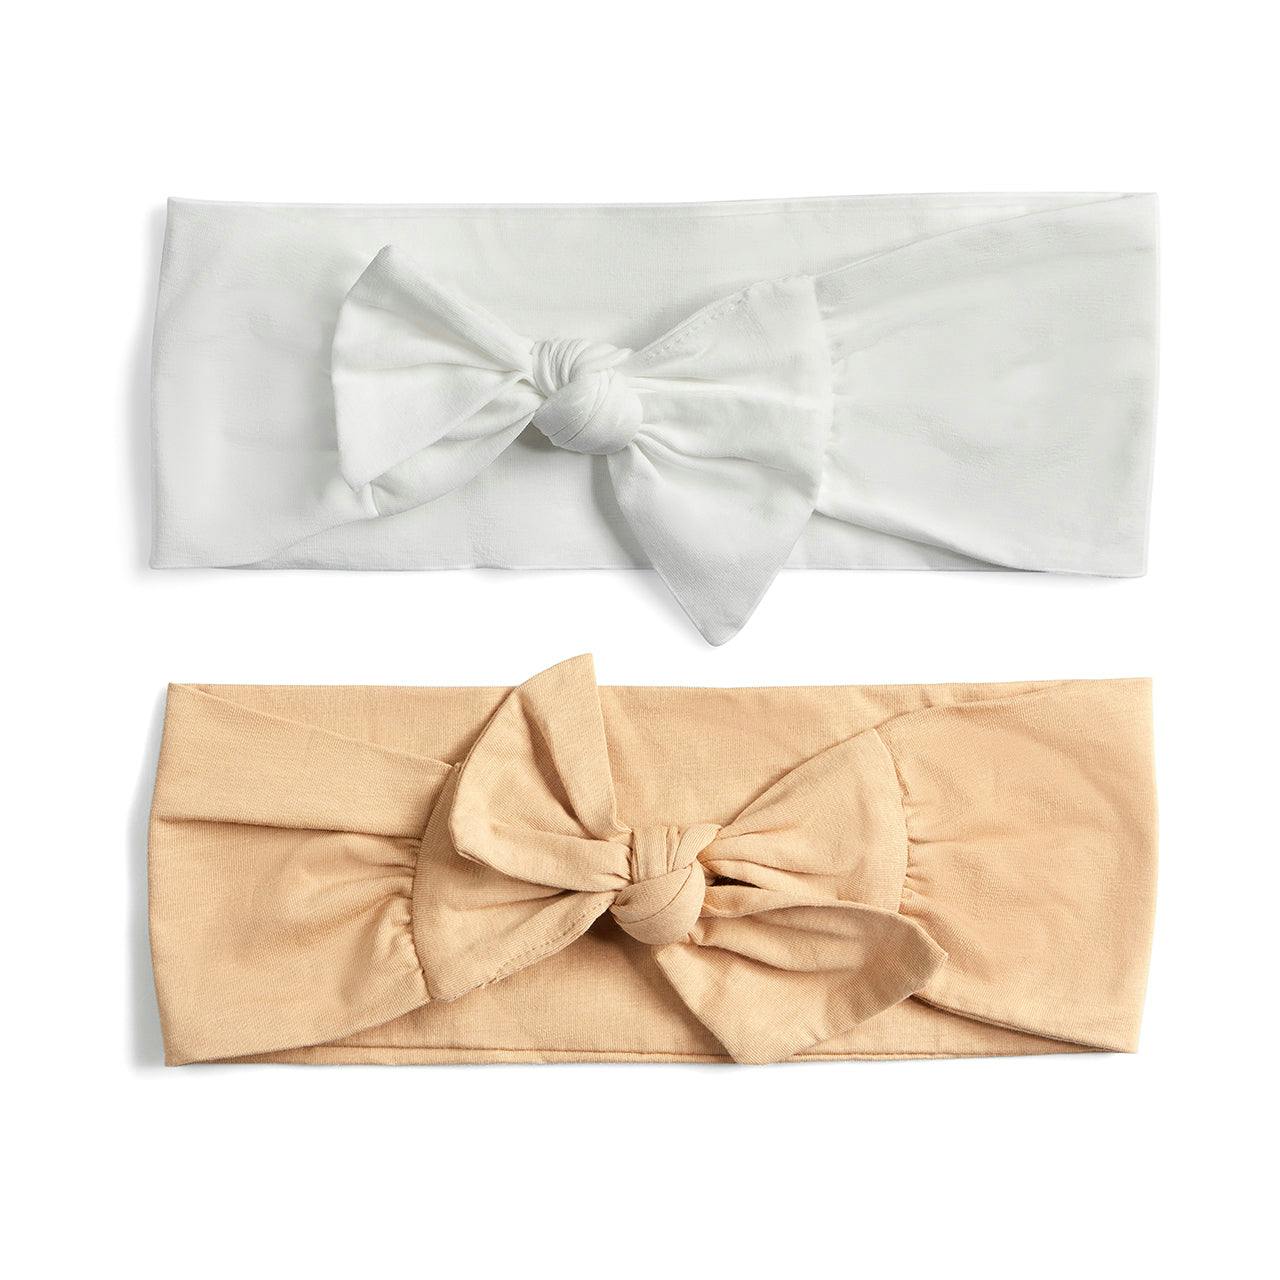 Kitsch Eco-Friendly Cotton Adjustable Headbands (2 Pack)